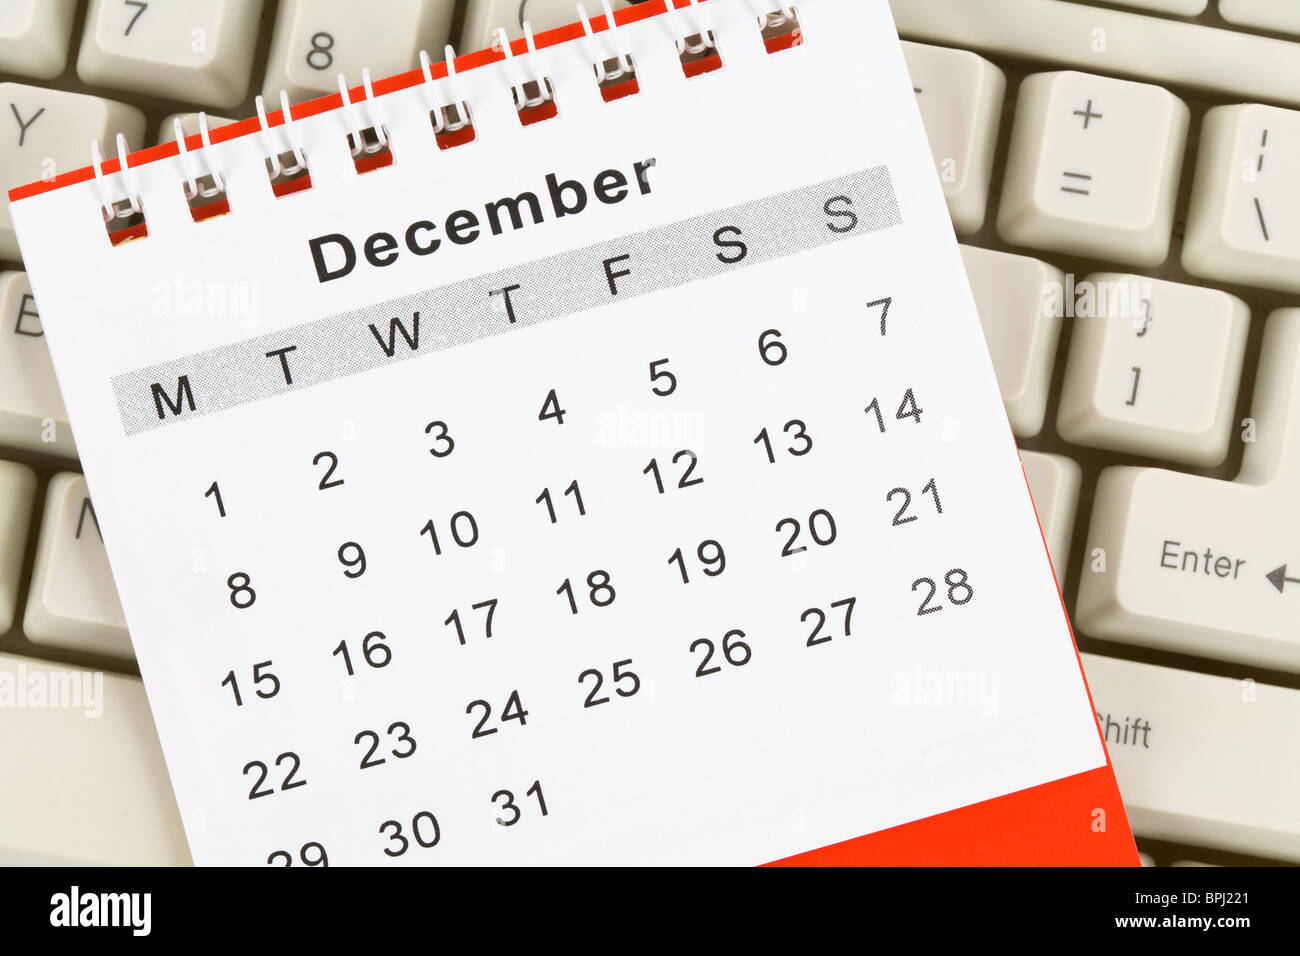 Calendar and Keyboard, December Stock Photo